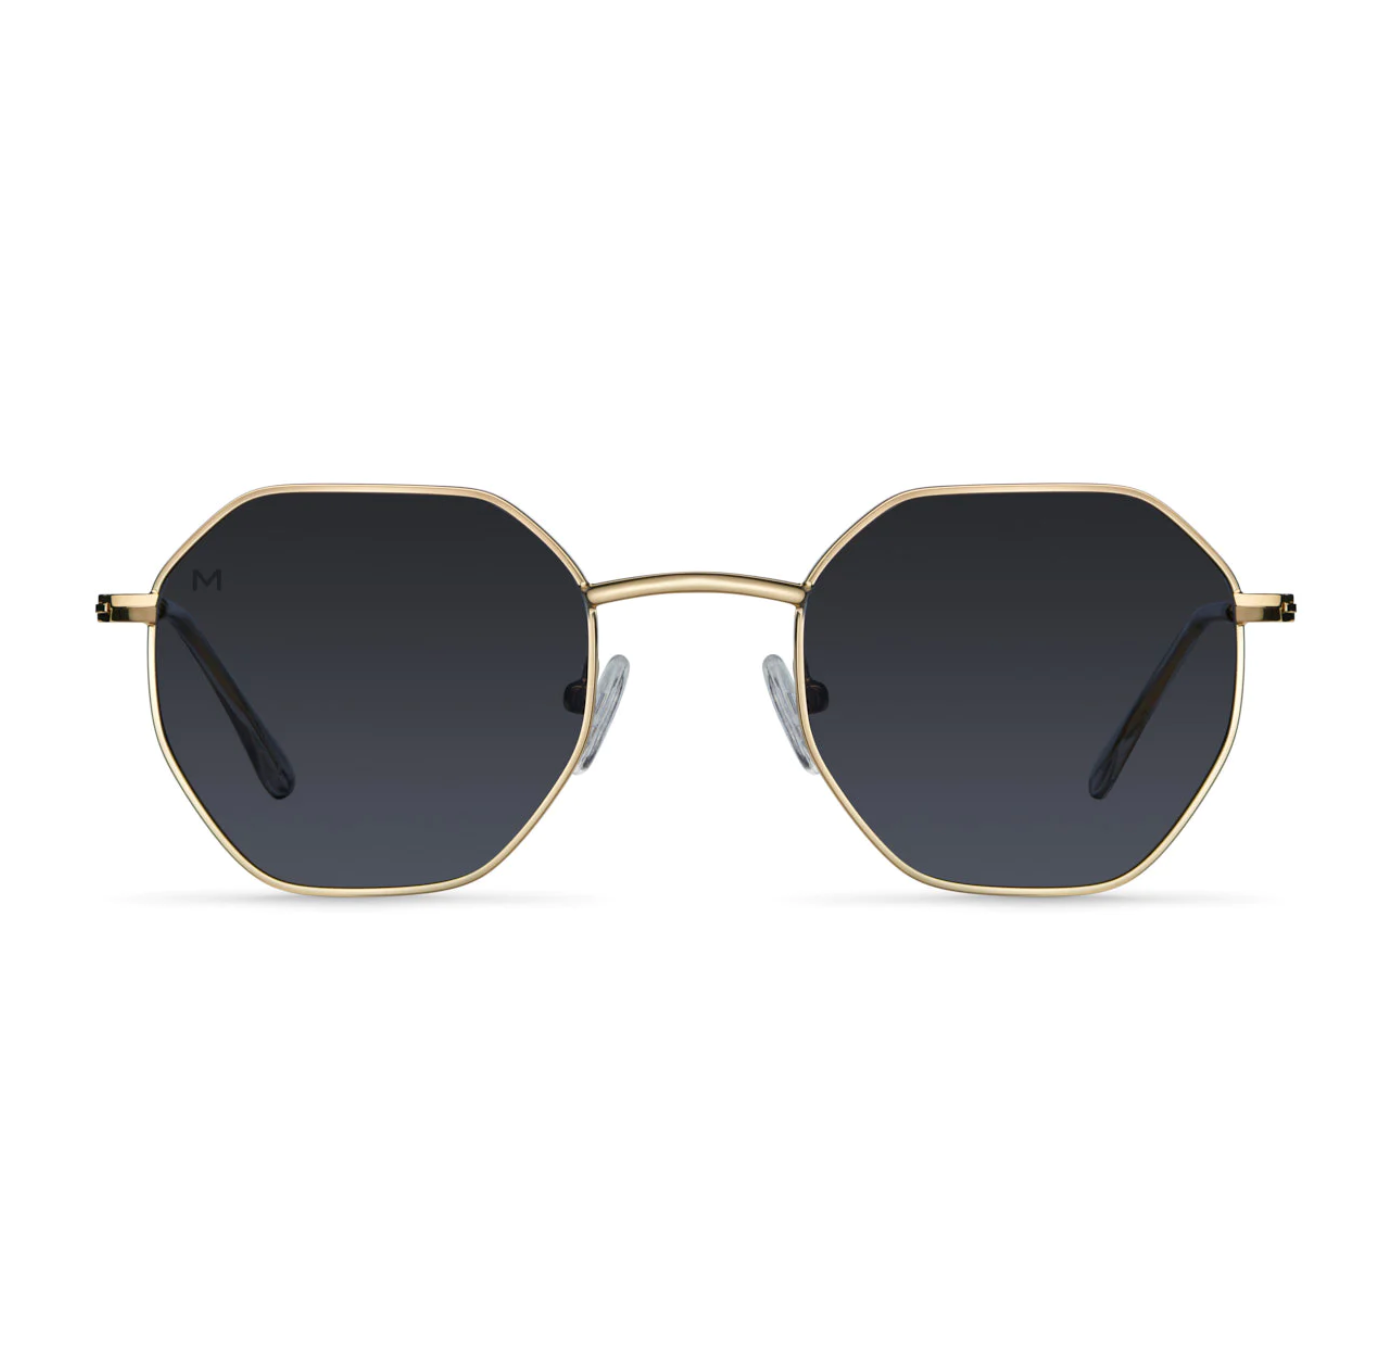 a pair of geometric sunglasses